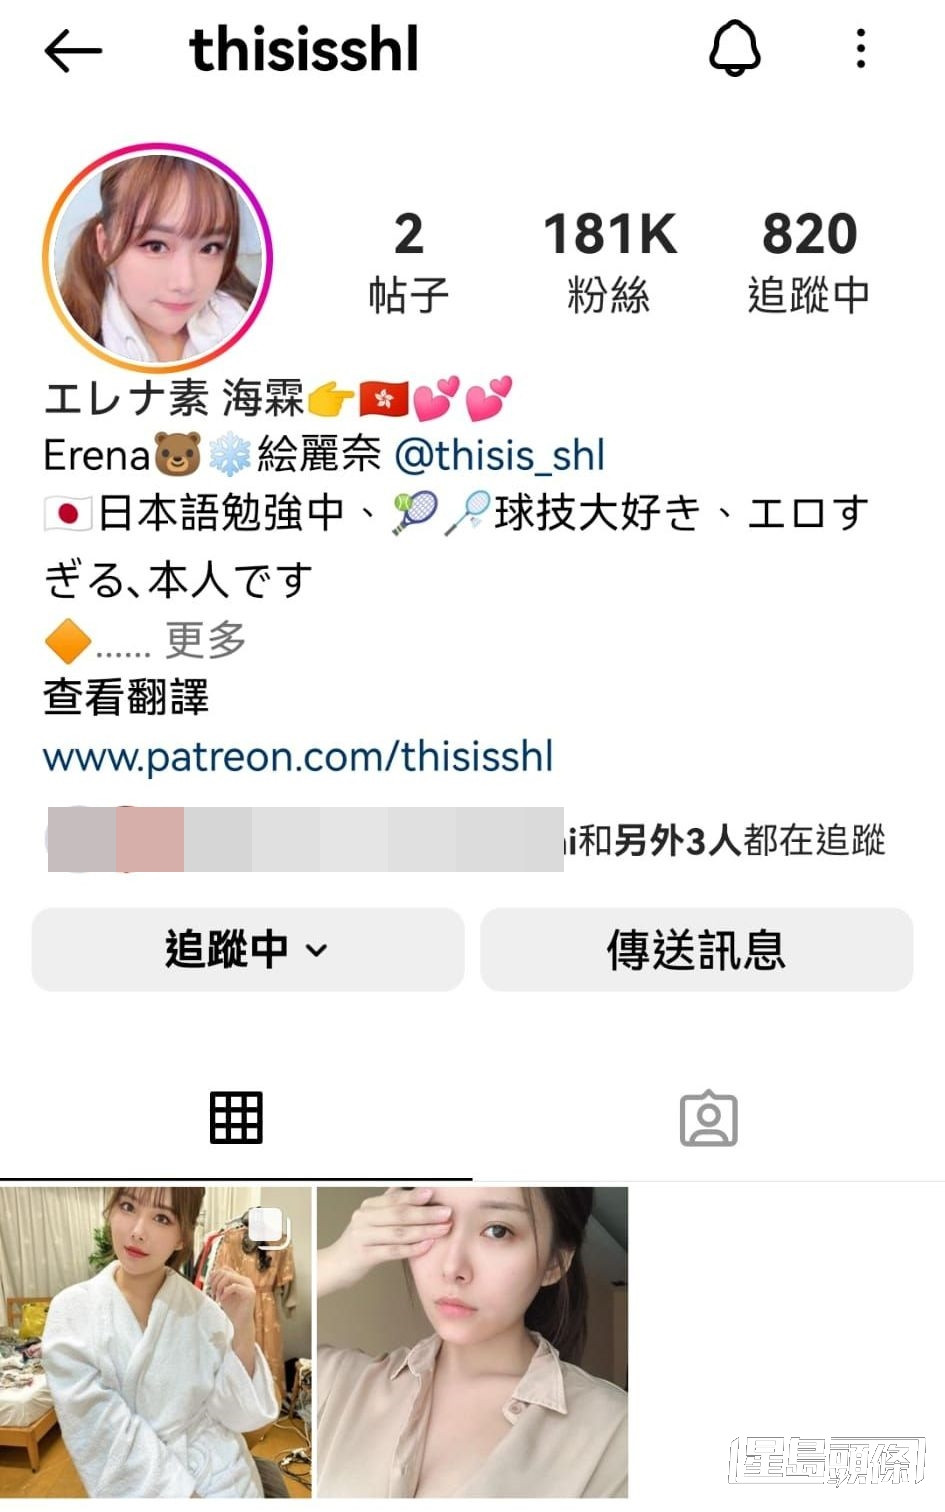 Erena的IG Follower由8万7千劲升到18万3，反应比预期中好。